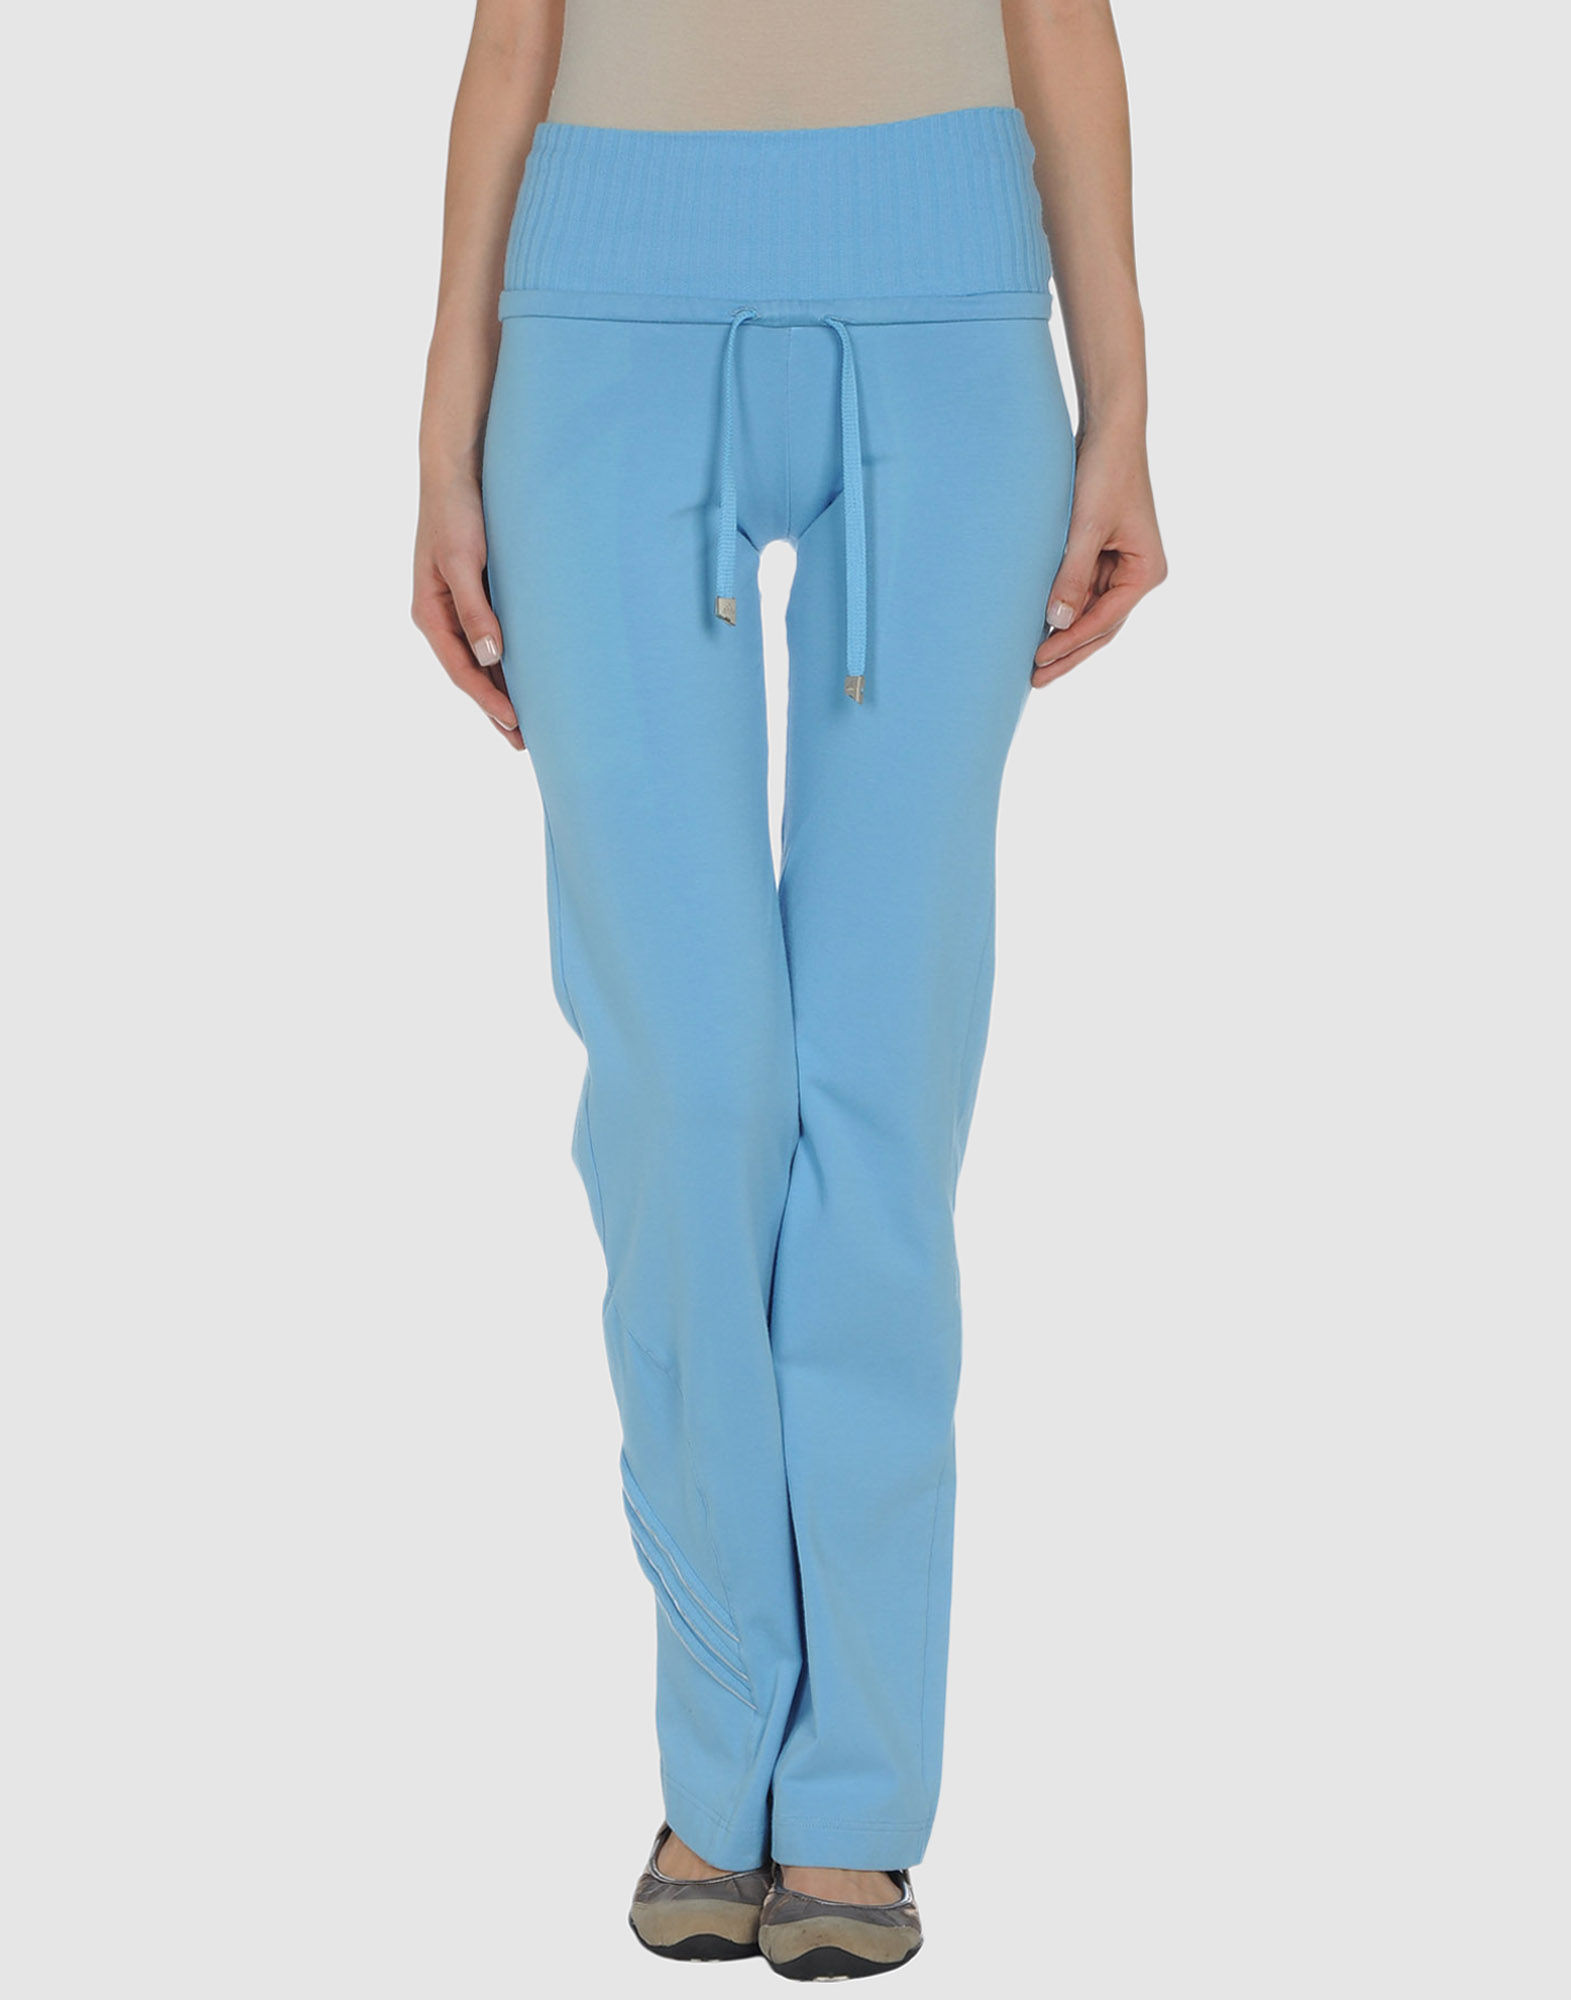 adidas Originals Cotton Sweat Pants in Sky Blue (Blue) - Lyst1571 x 2000